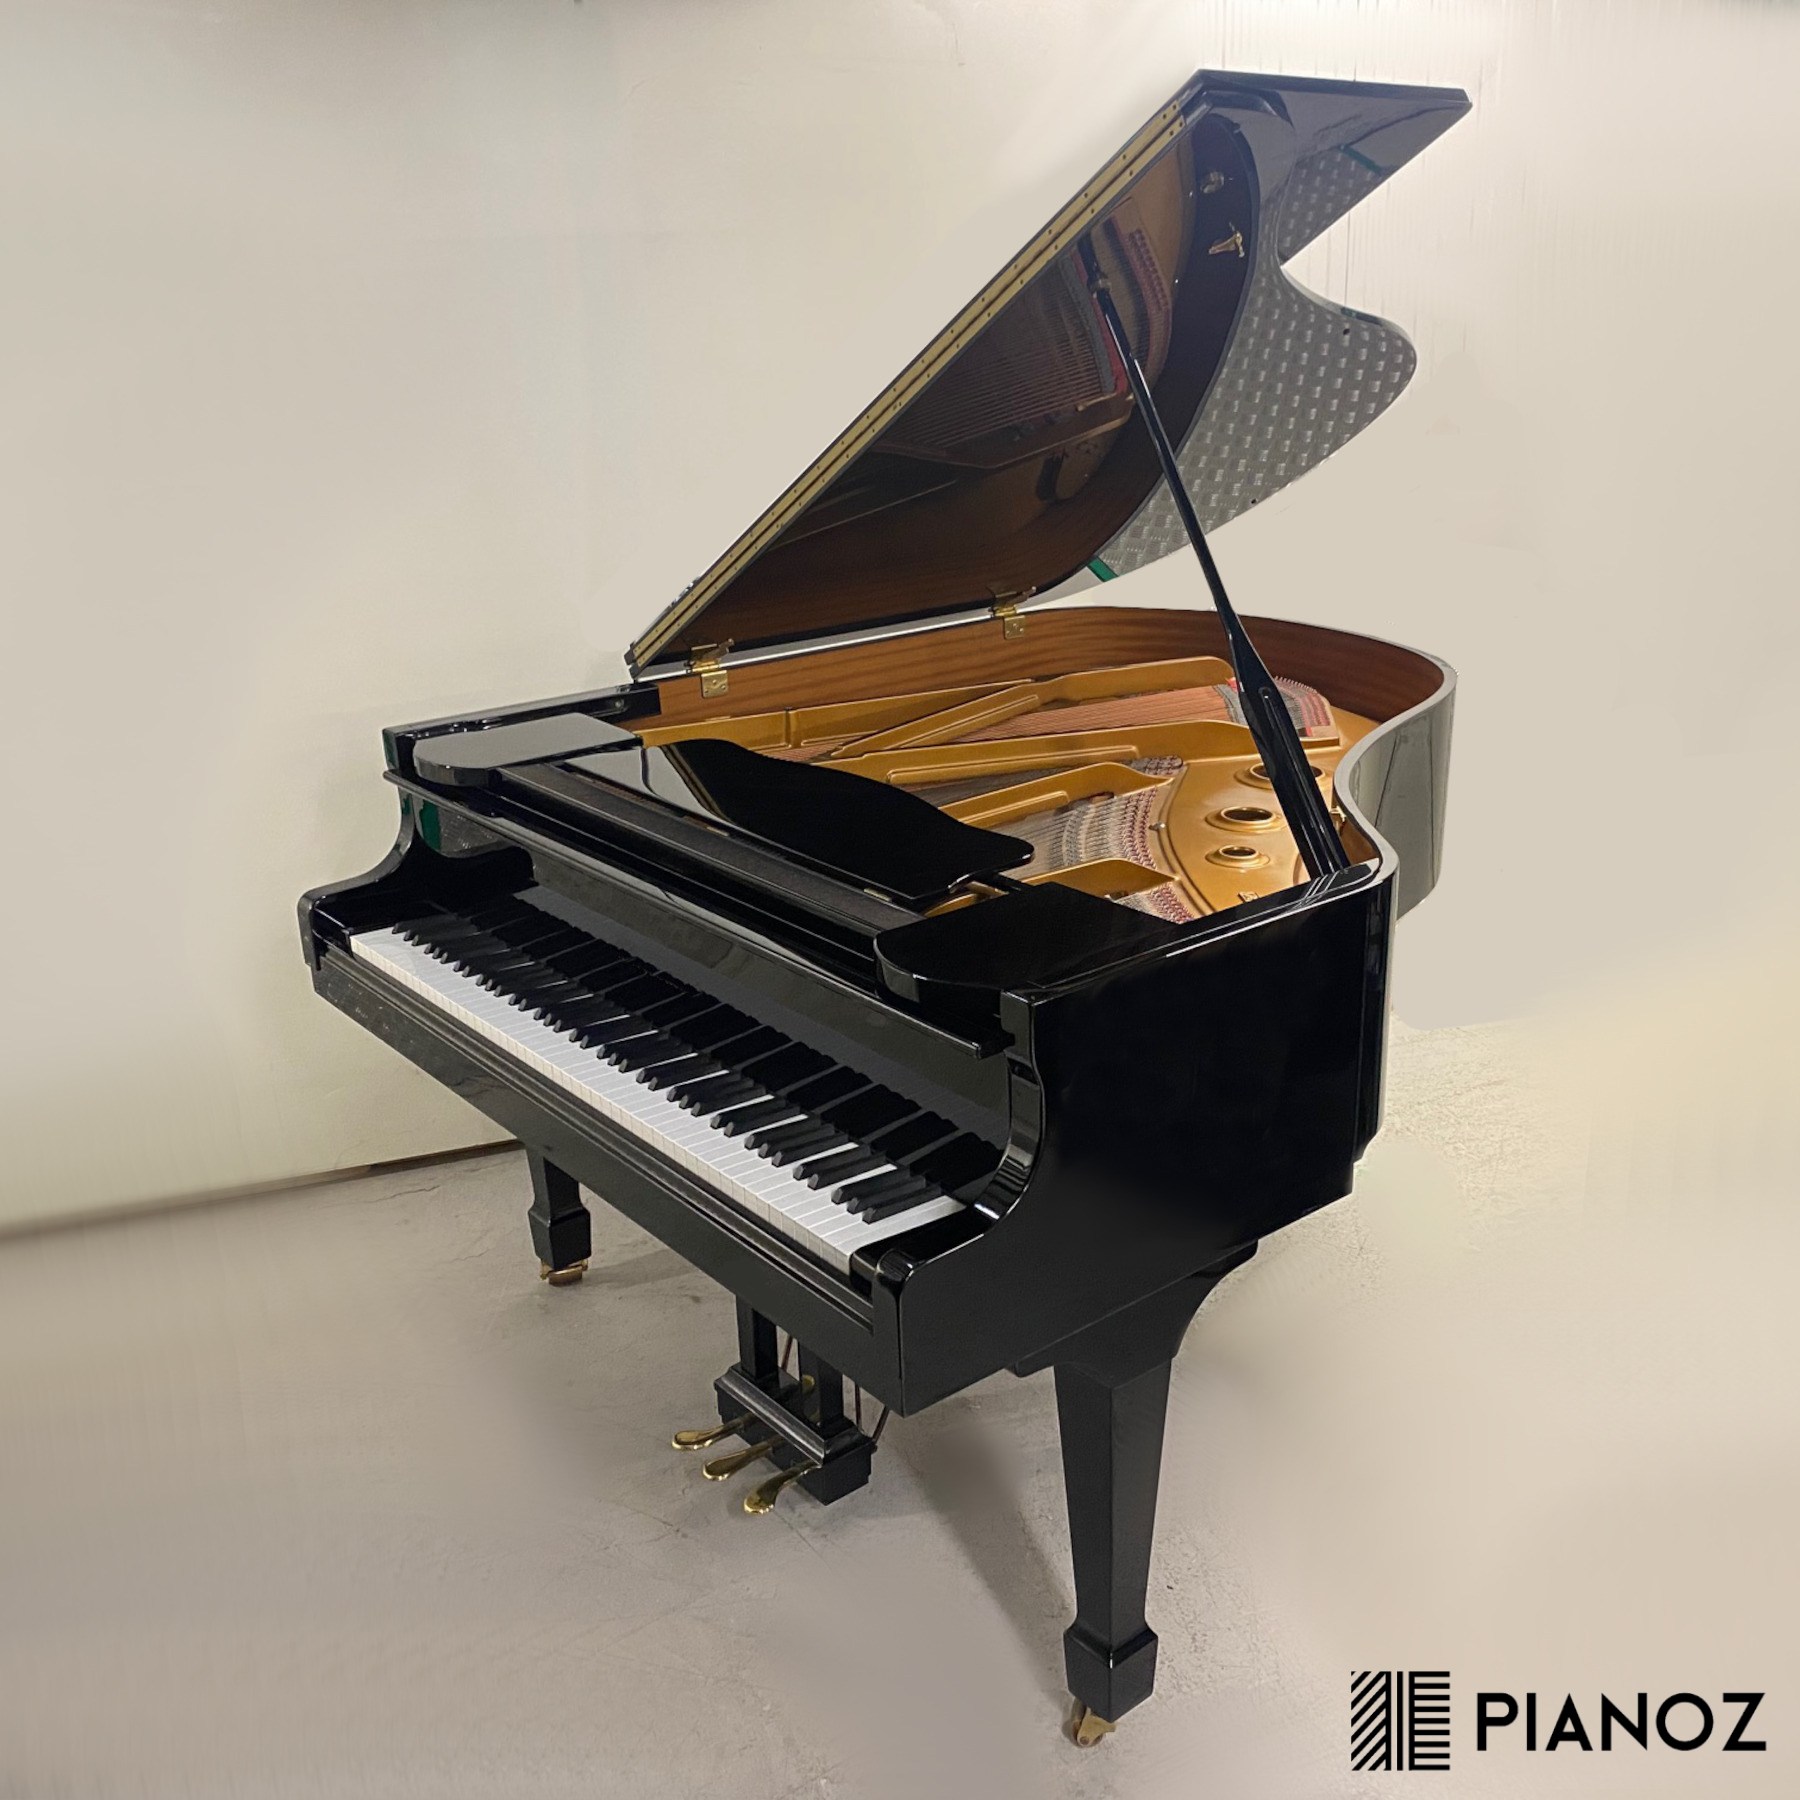 Reid Sohn 172cm Grand Piano piano for sale in UK